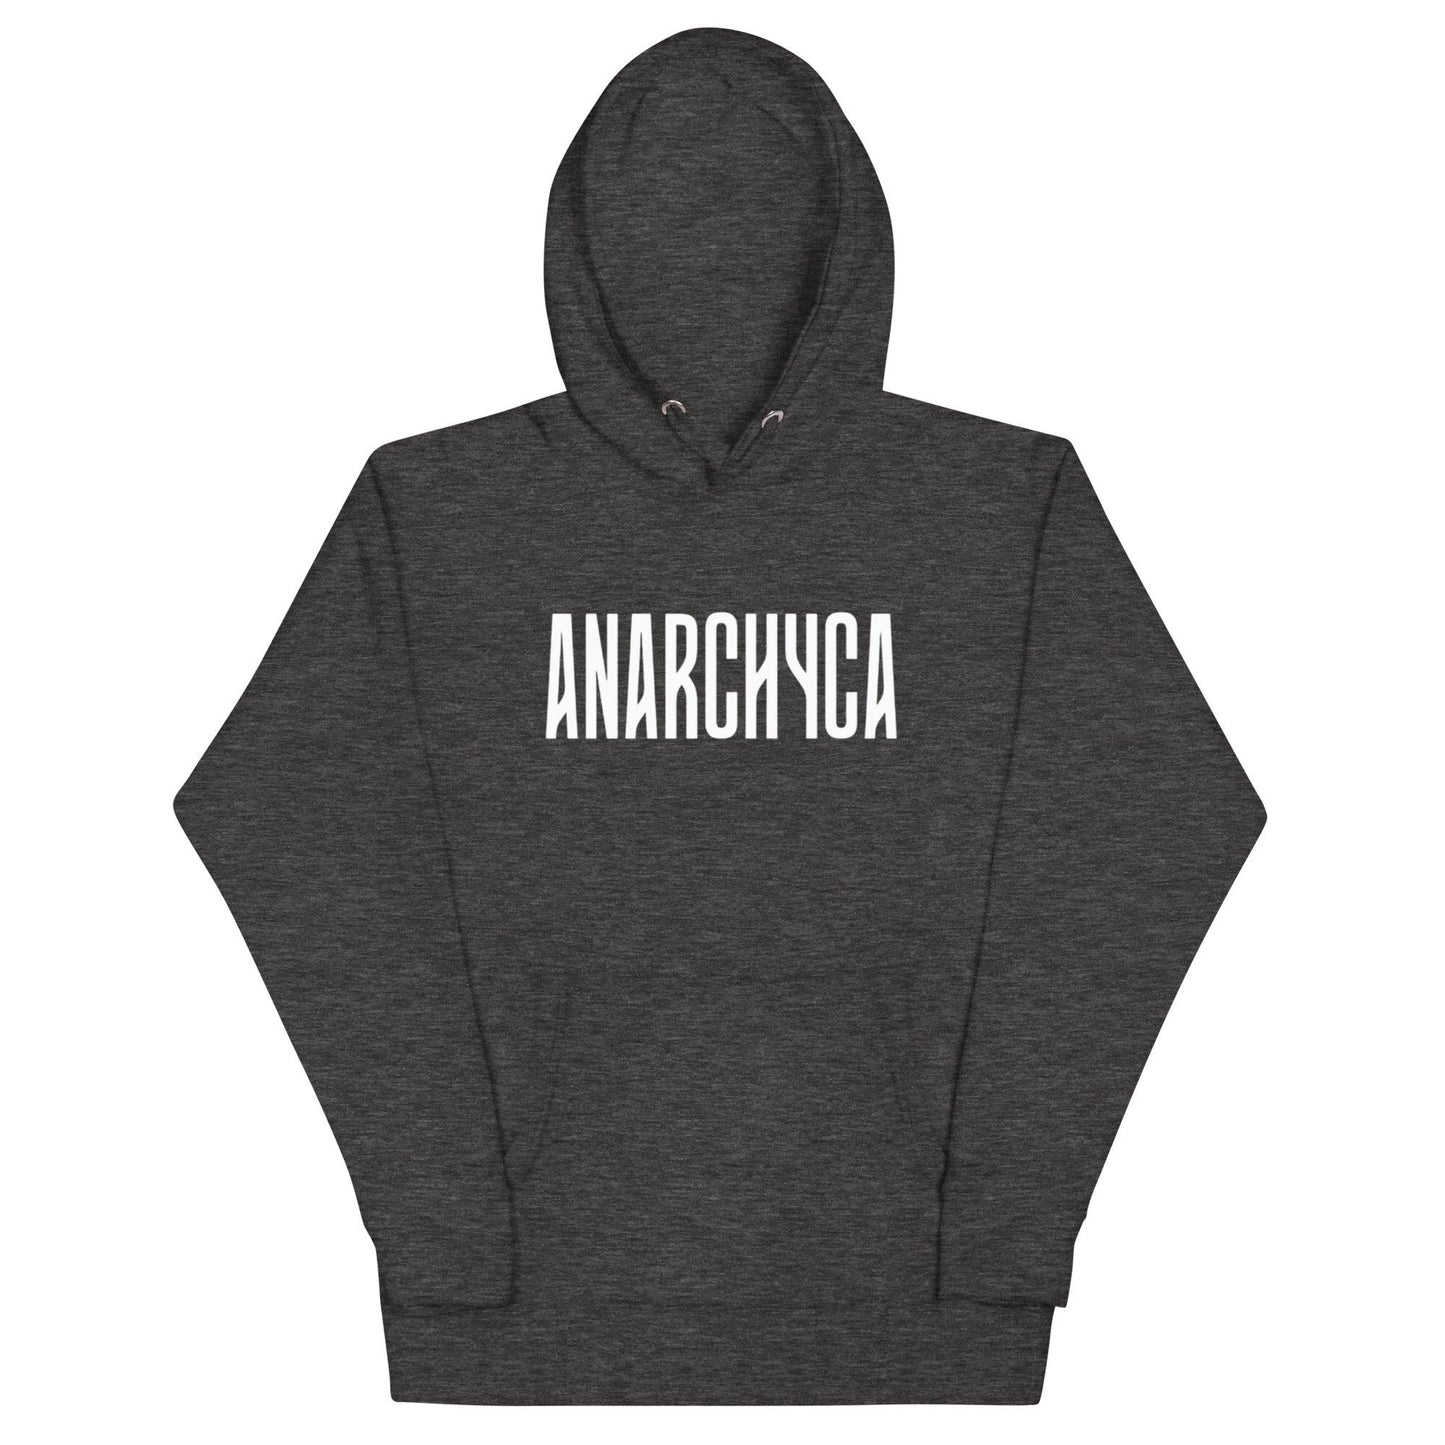 ANARCHYCA - Anarchyca-clothing